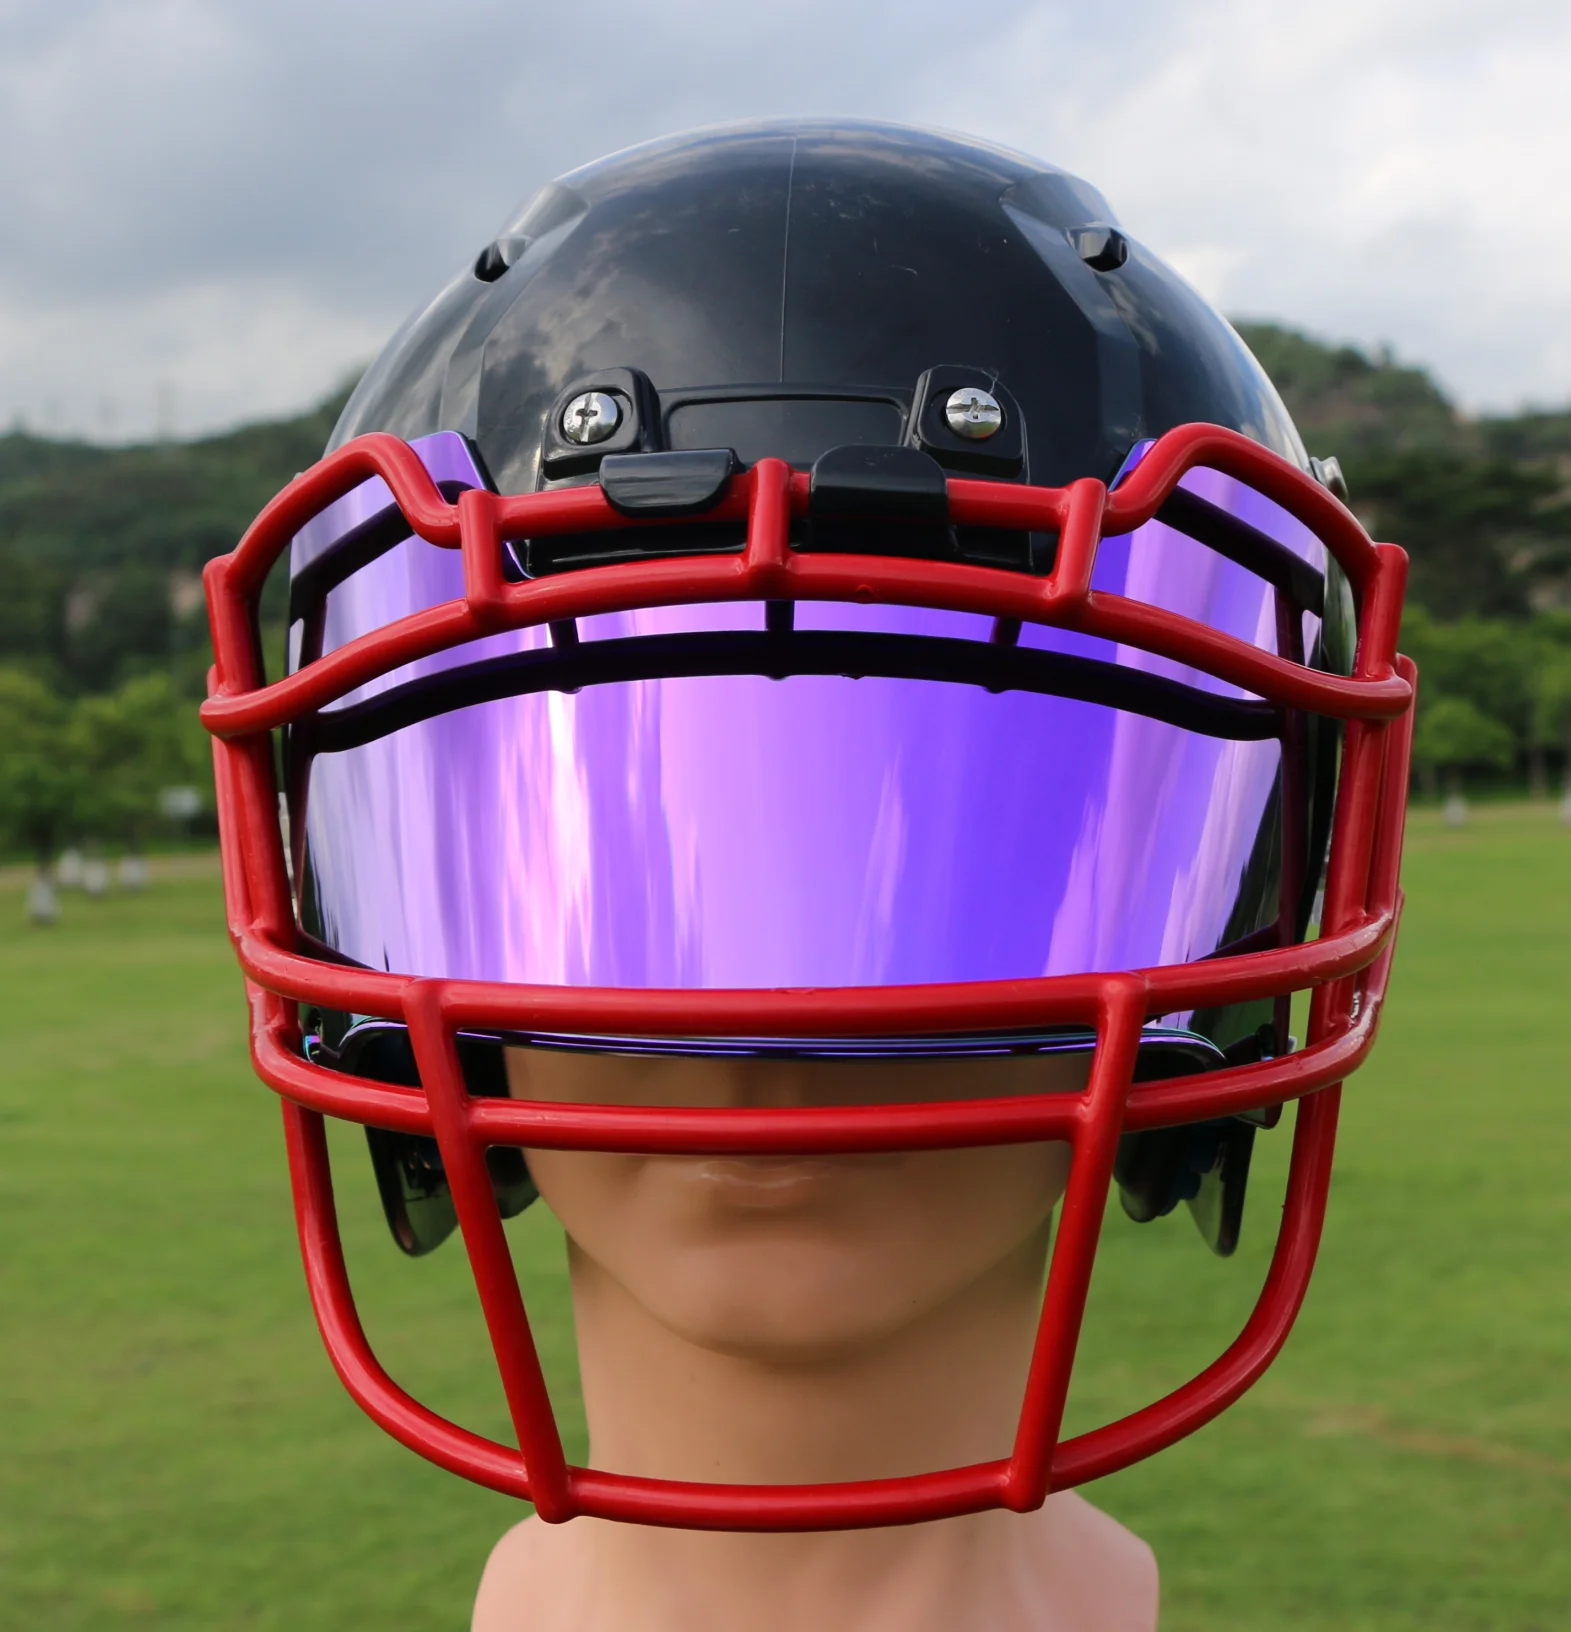  SLEEFS Football Helment Visor [Borealis Rainbow] - Tinted  Professional Football Visor/Shield - Fits Youth & Adult Helmets - Includes  Quick Visor Clips + Microfiber Travel Bag : Automotive